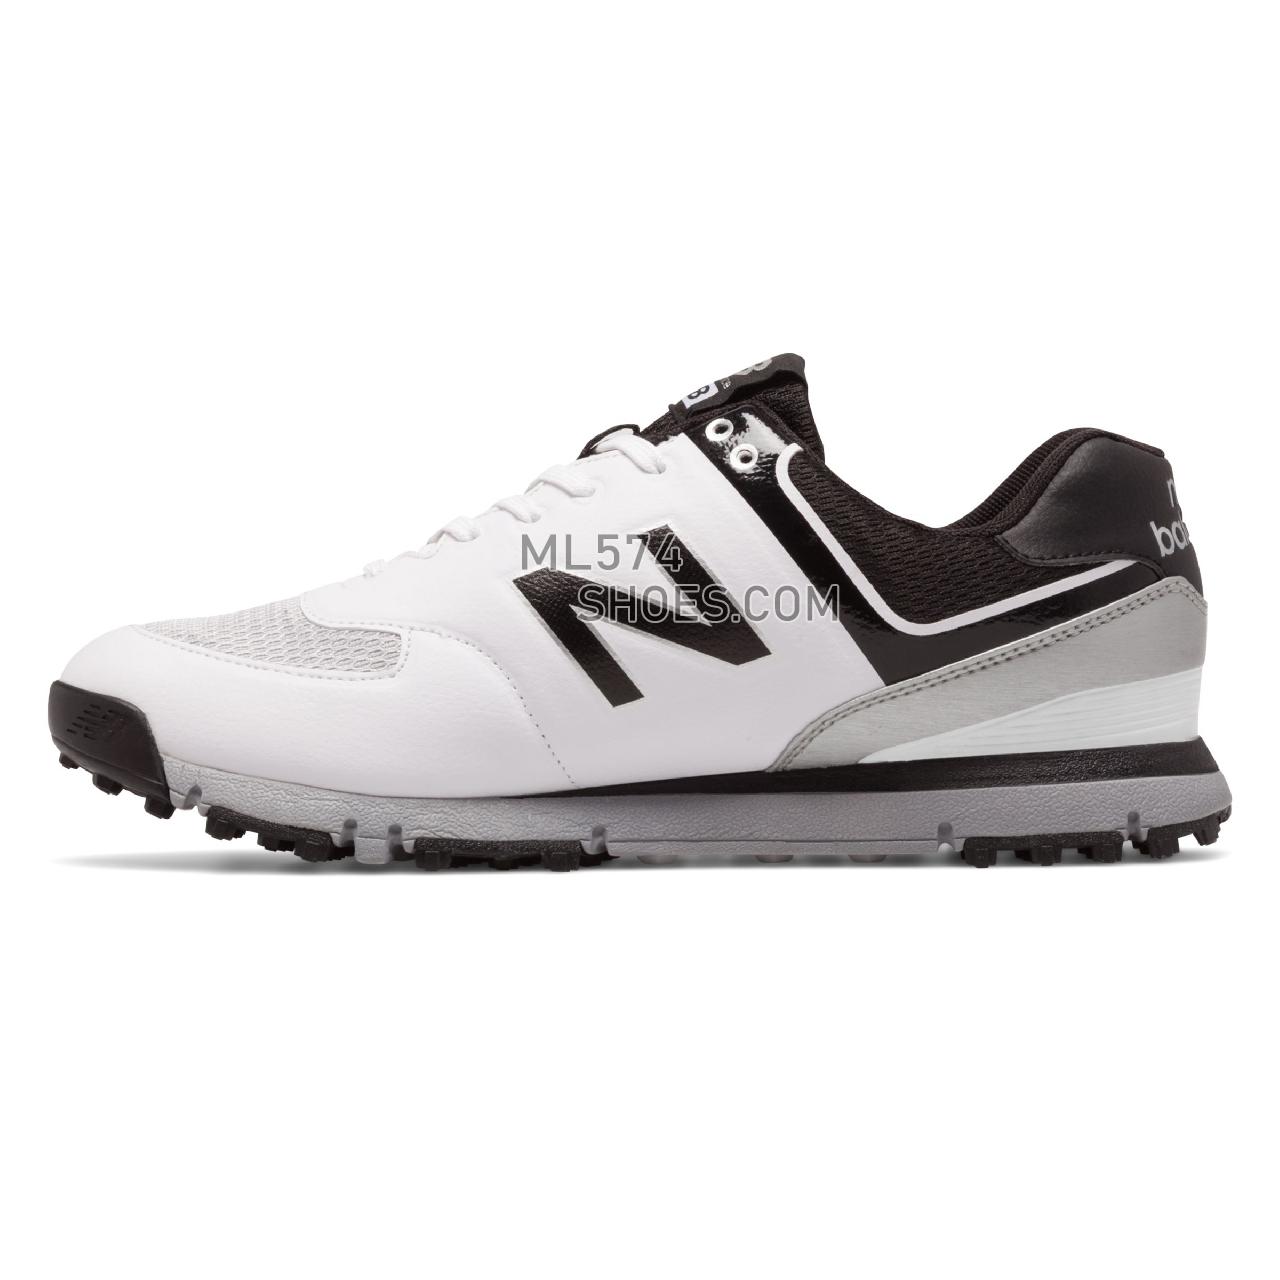 New Balance New Balance Golf 518 - Men's 518 - Golf White with Black and Grey - NBG518WK